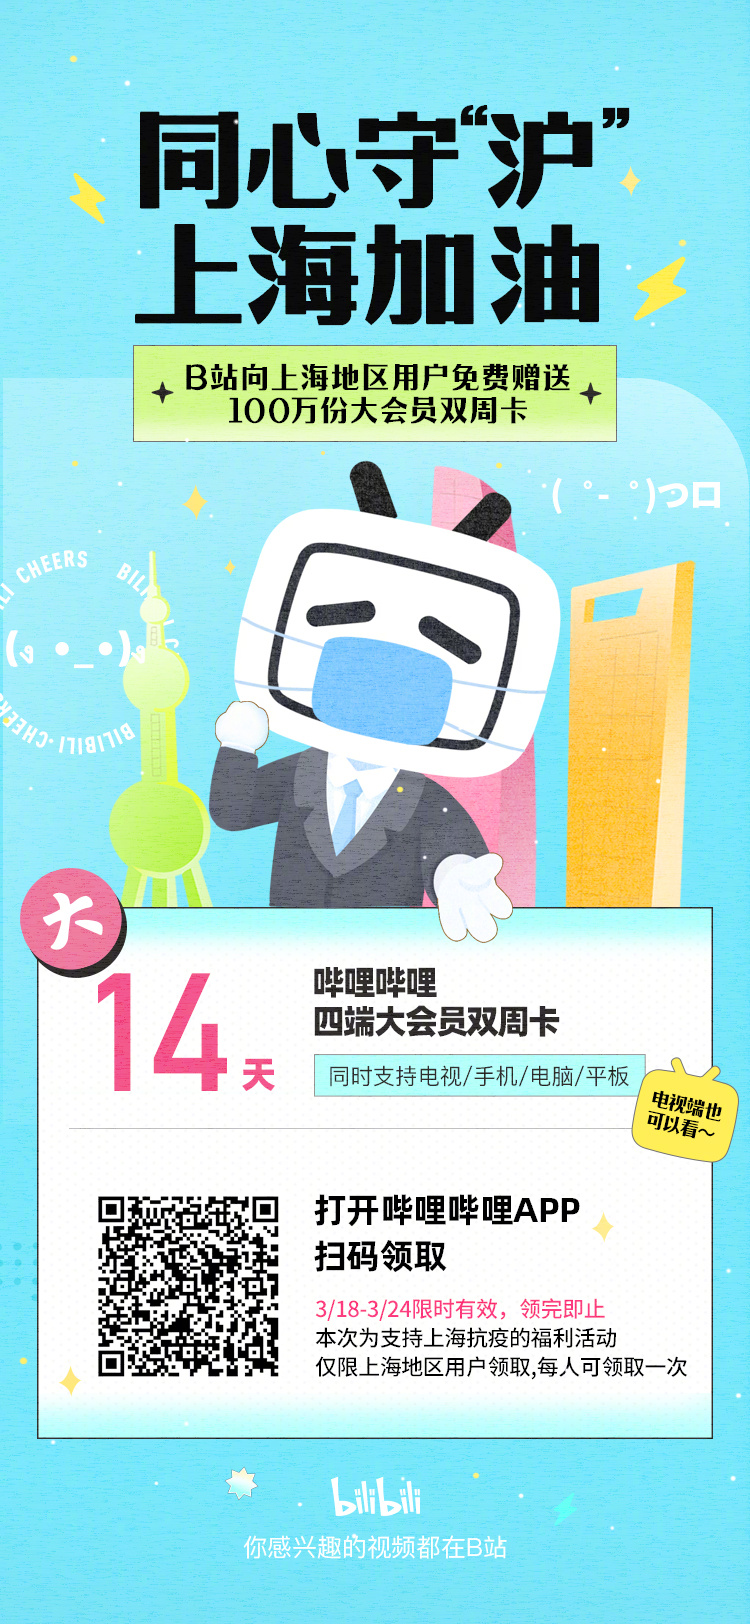 B站向上海民众赠送100万份大会员双周卡 免费领取